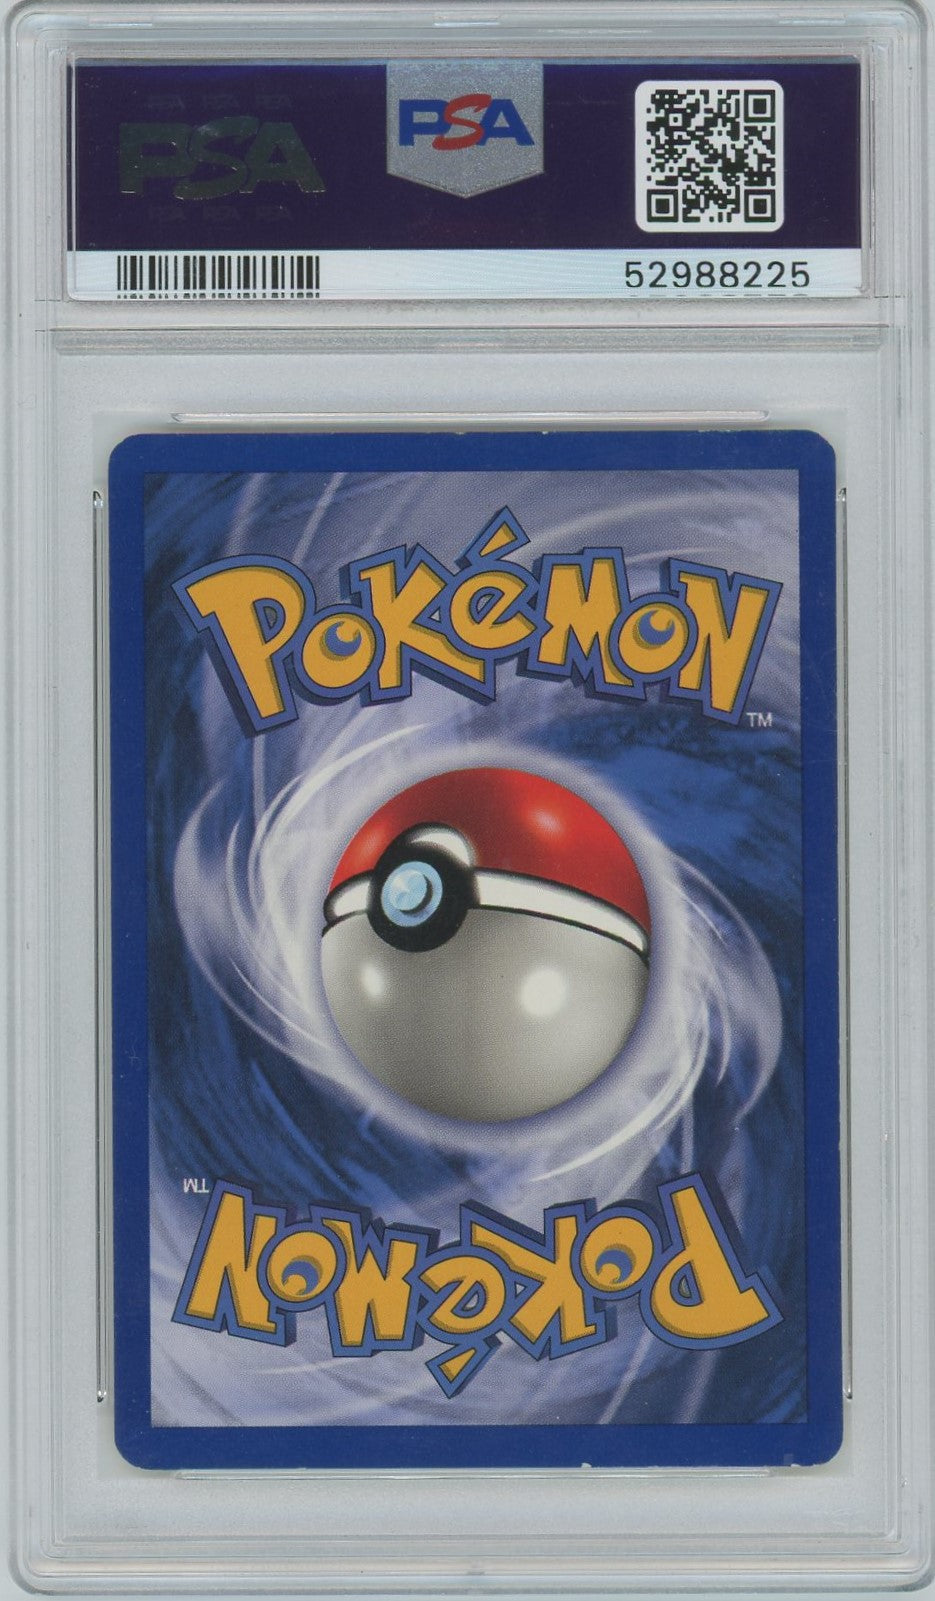 PSA 5 - 1999 Pokémon - Charizard - Holo